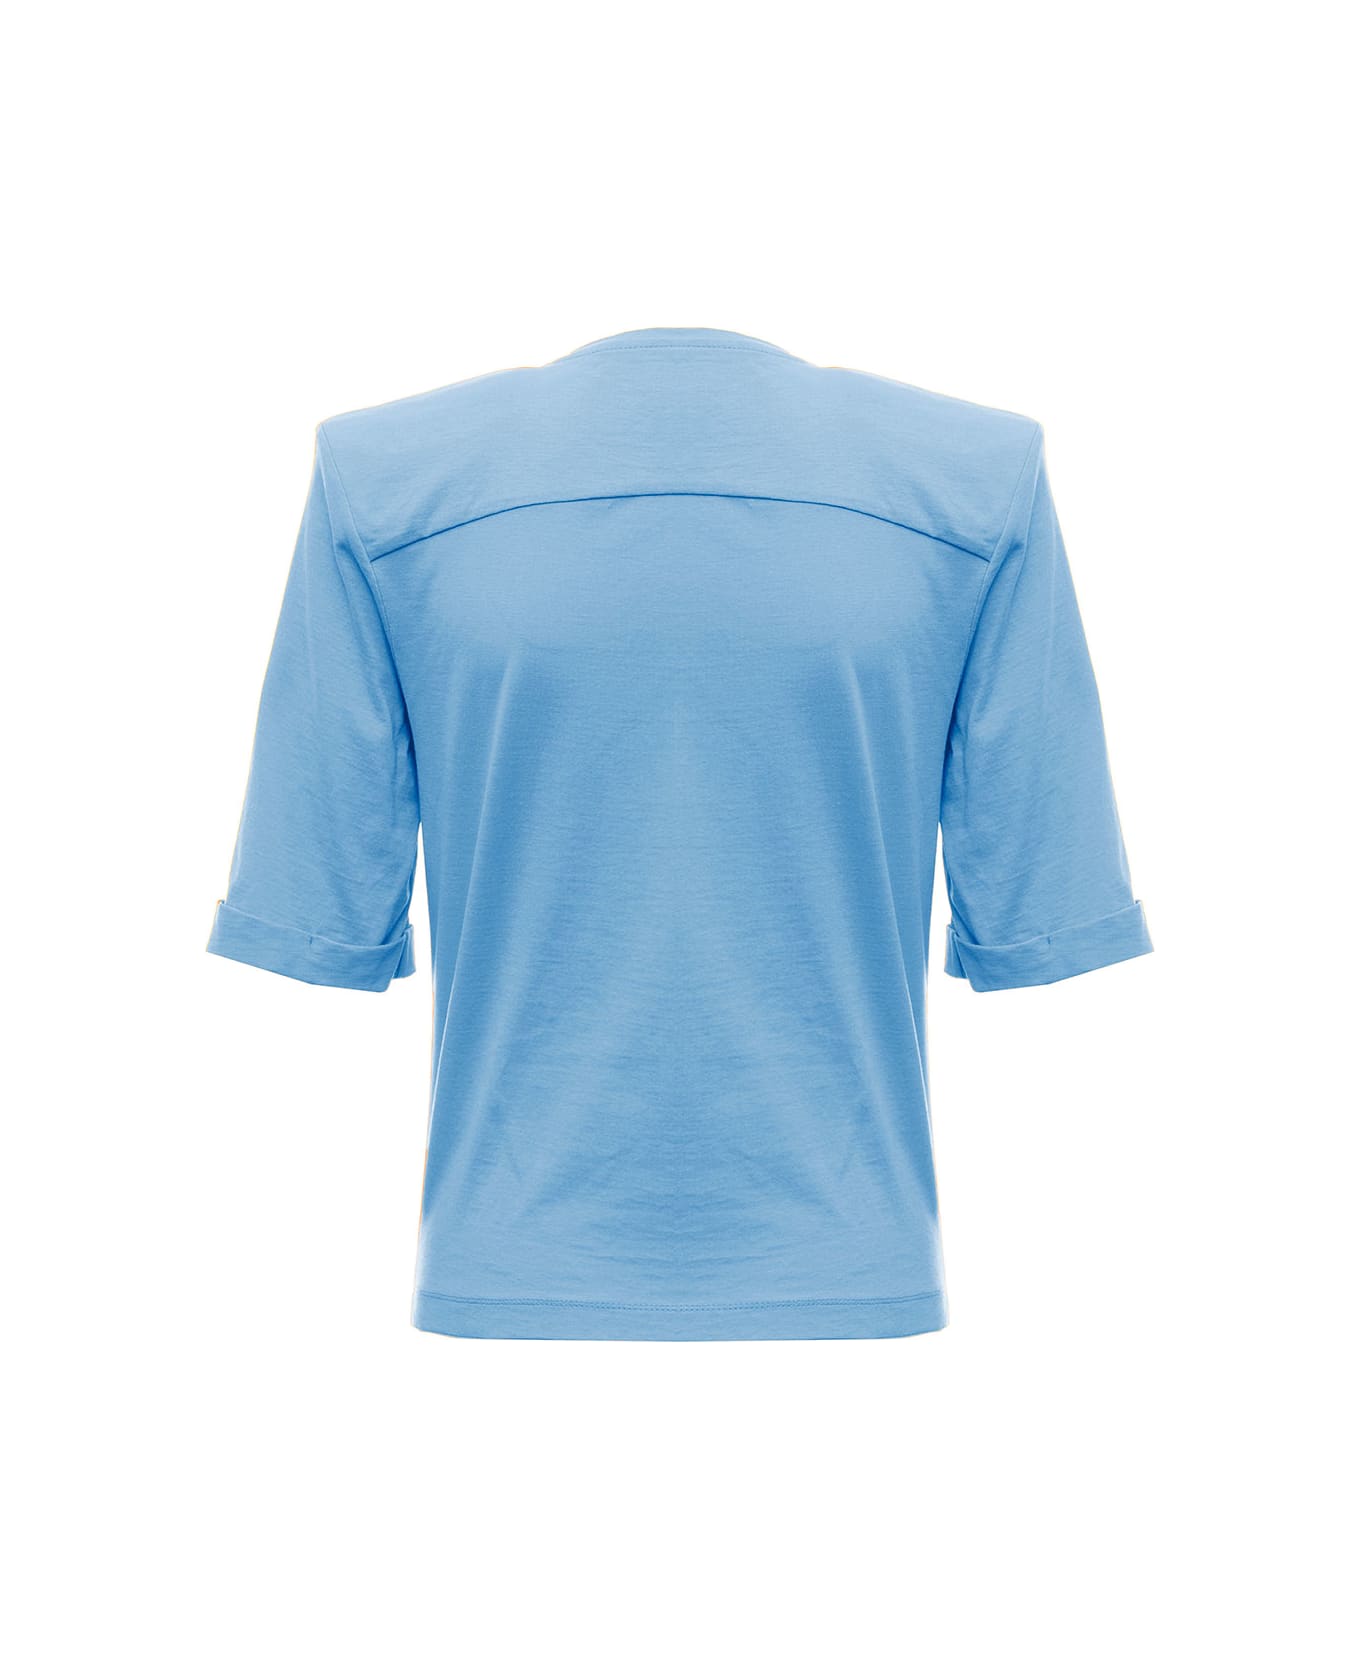 Federica Tosi Woman's Light  Blue Cotton T-shirt - Blu